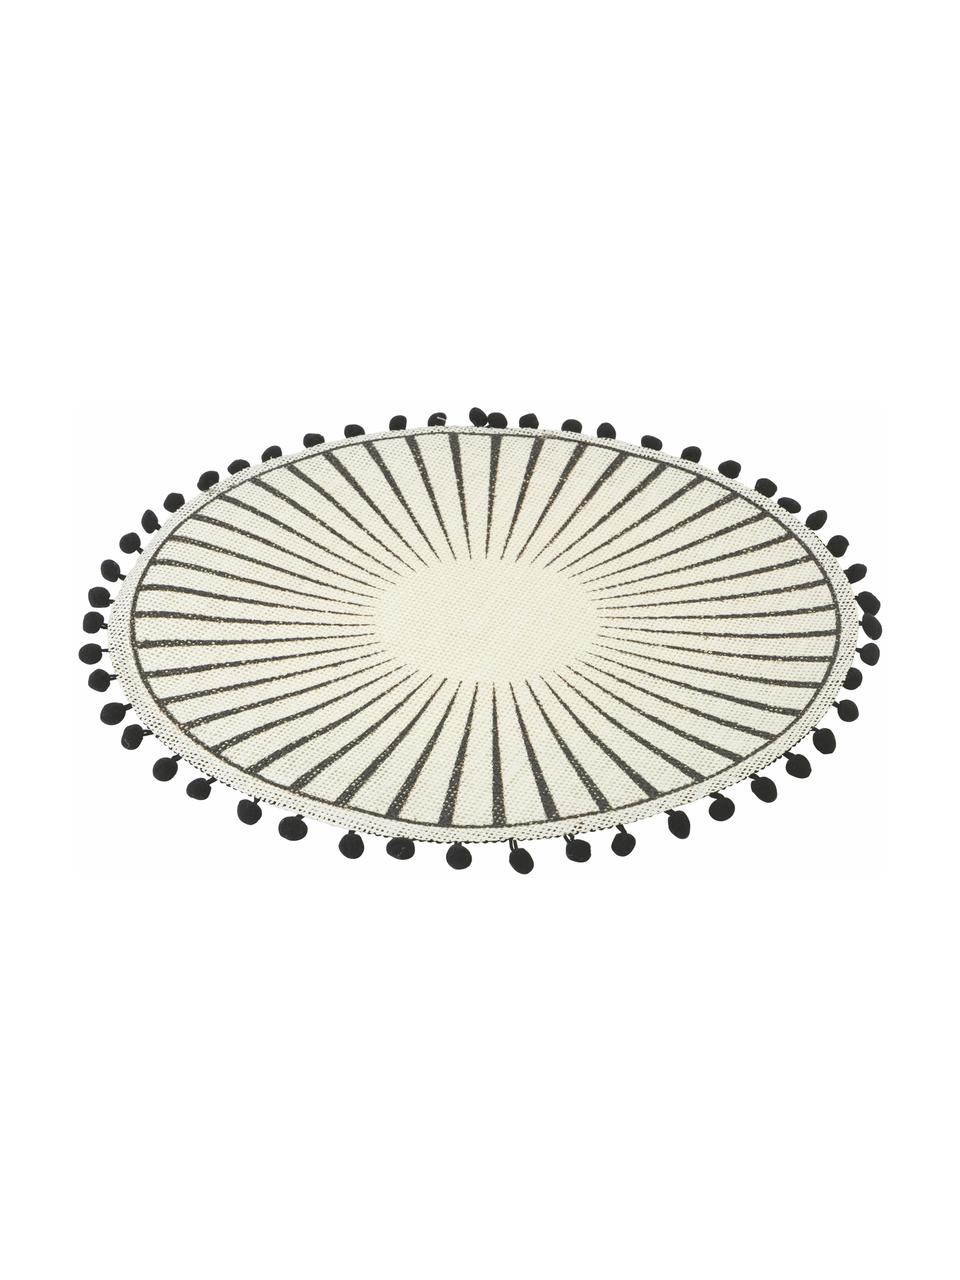 Tovaglietta americana con pompon Blackpon 6 pz, Juta, Bianco, nero, Ø 38 cm